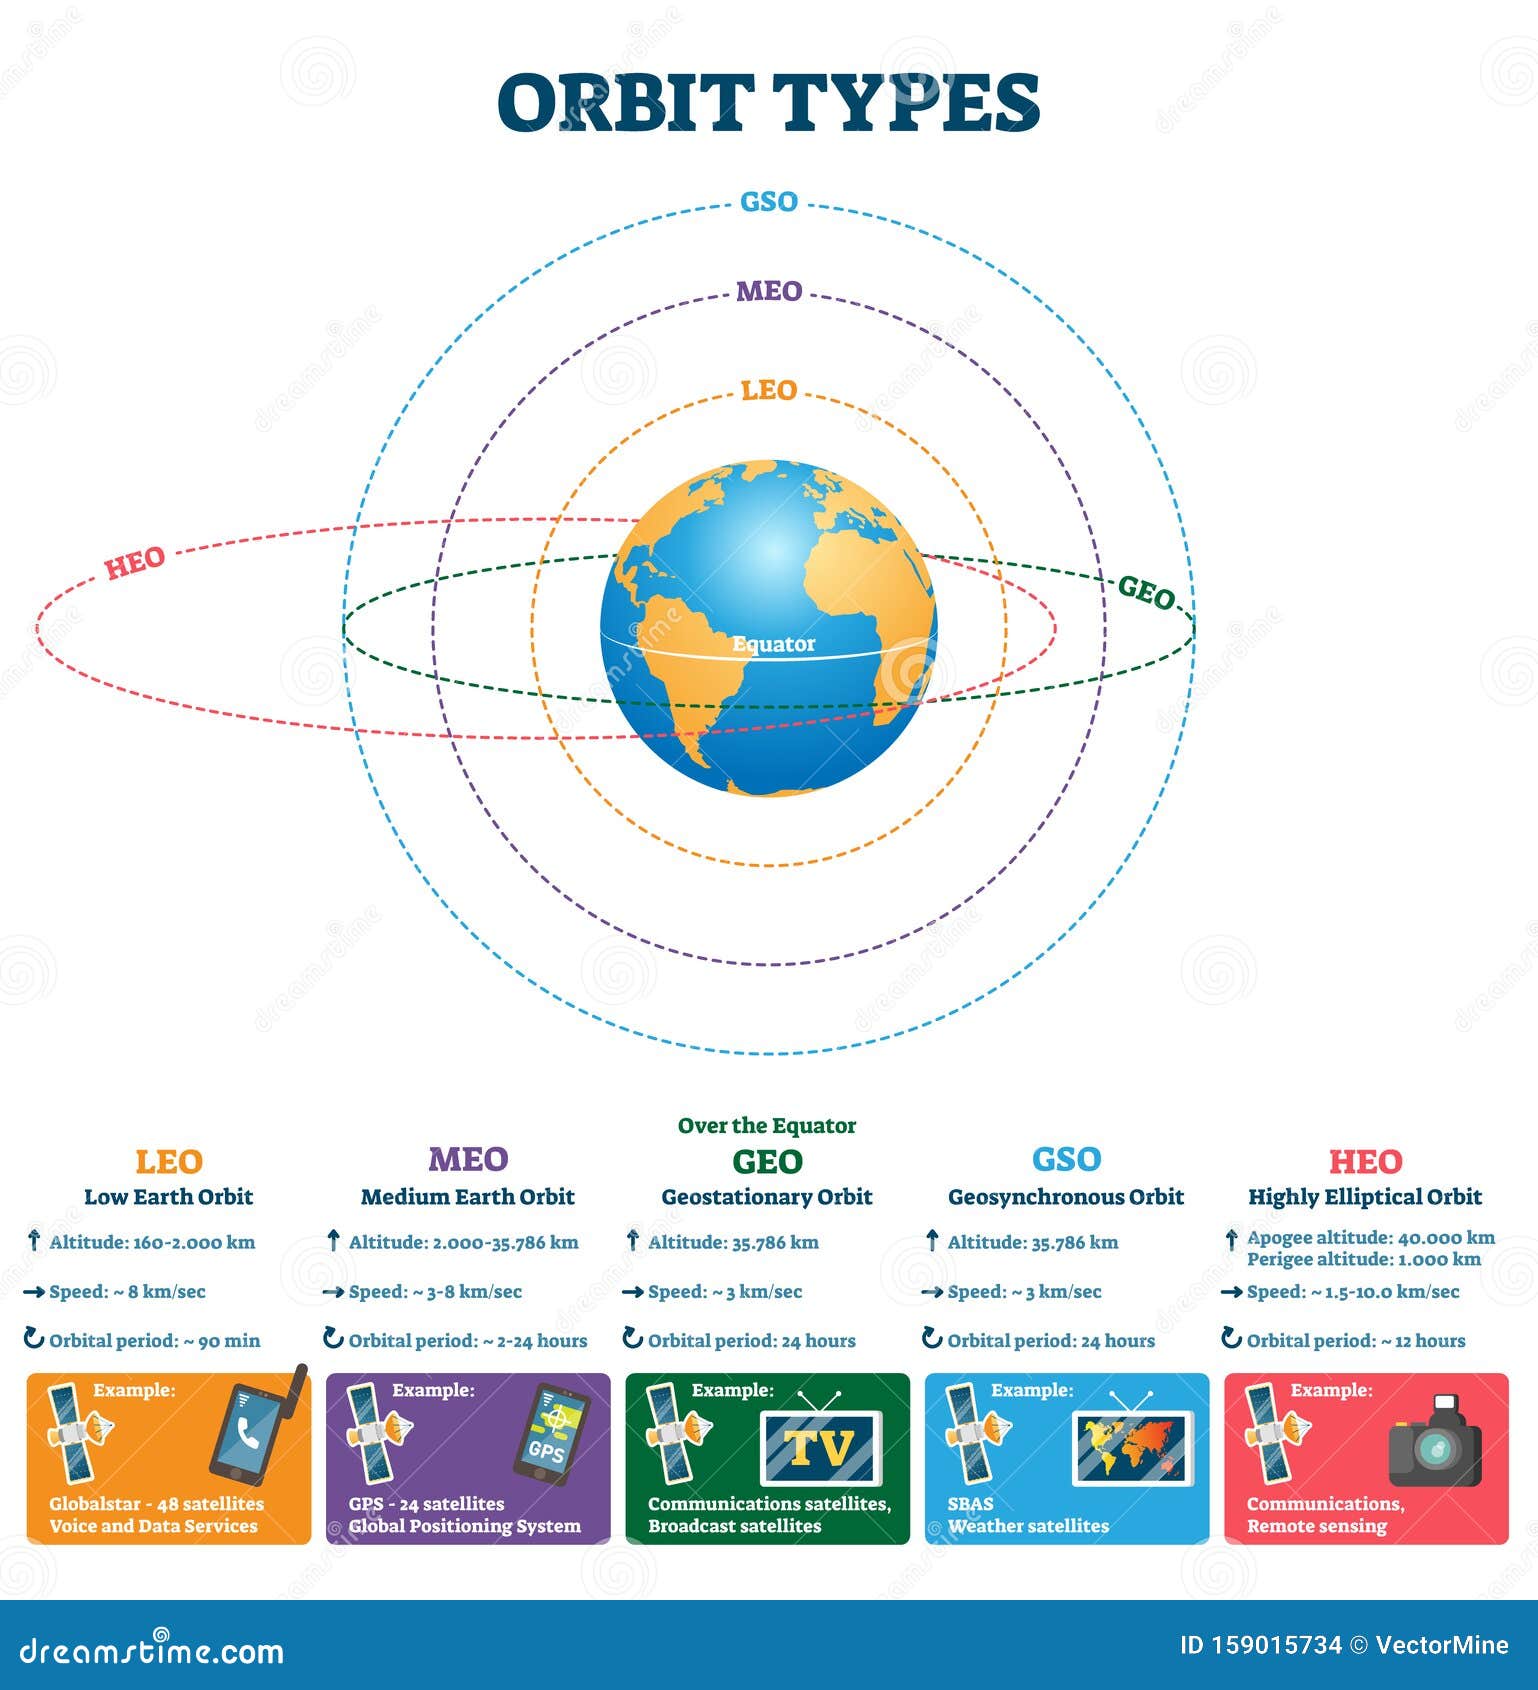 orbit types  . labeled satellites altitude, speed scheme.